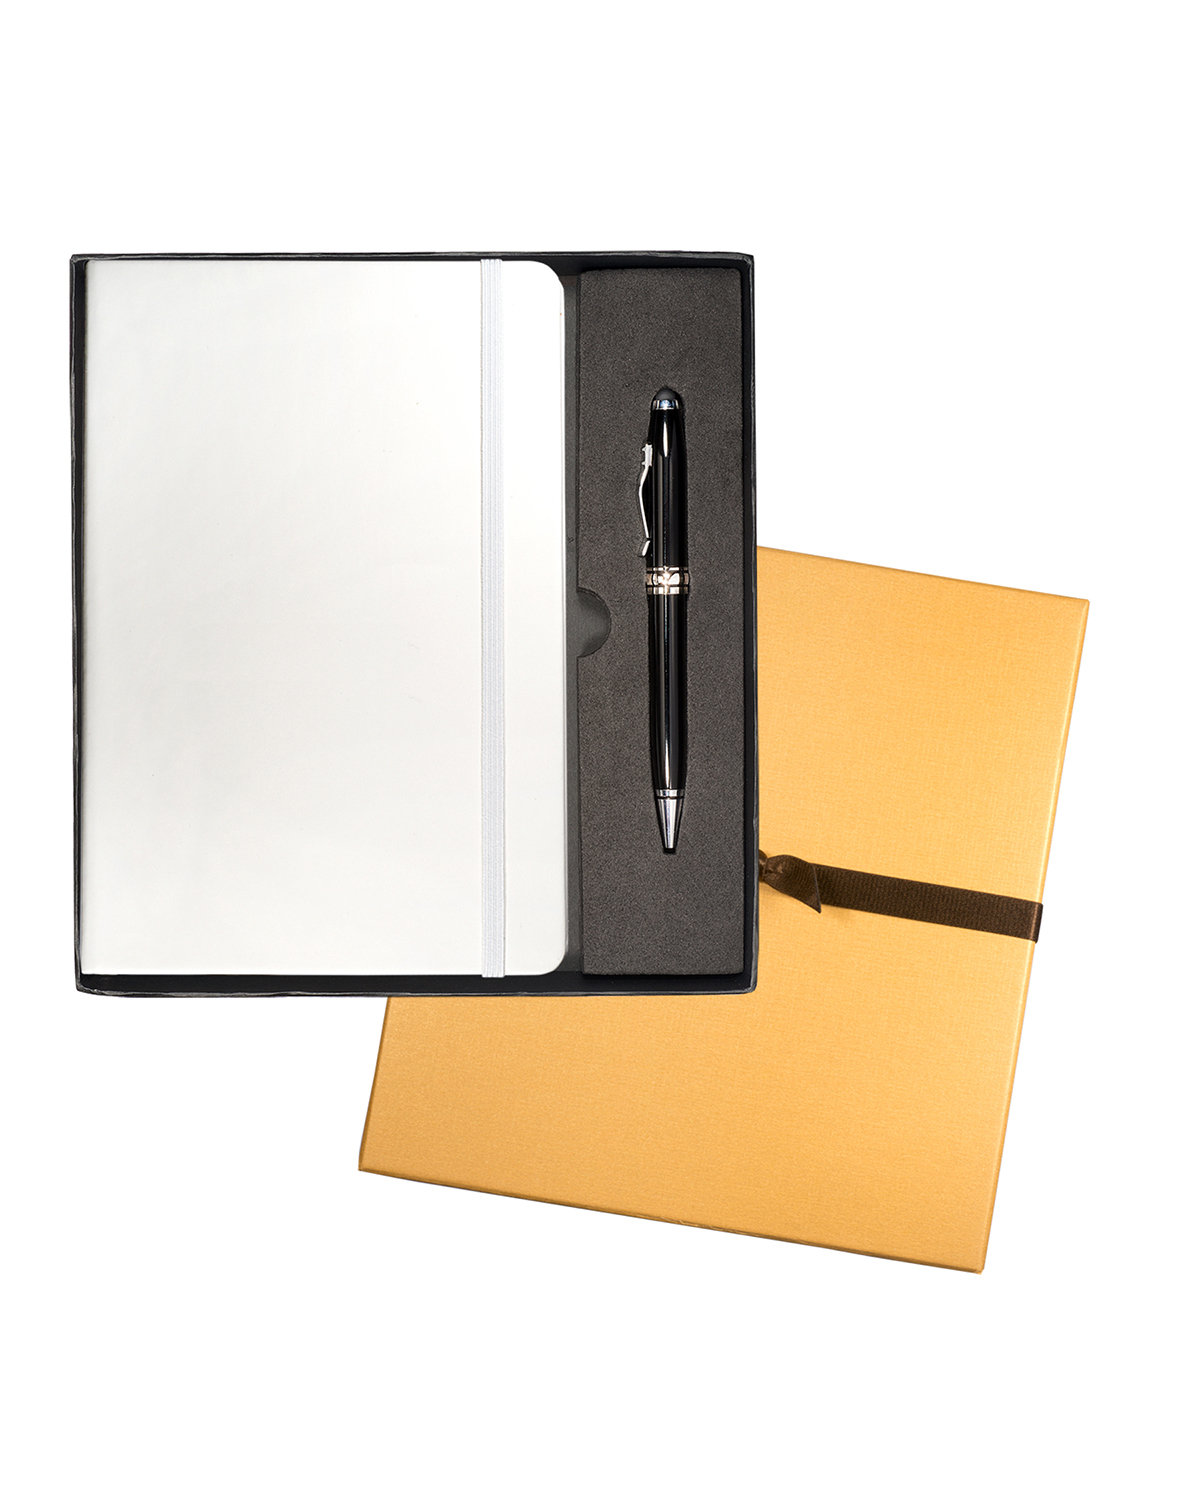 Leeman Tuscany™ Journal And Executive Stylus Pen Set white 